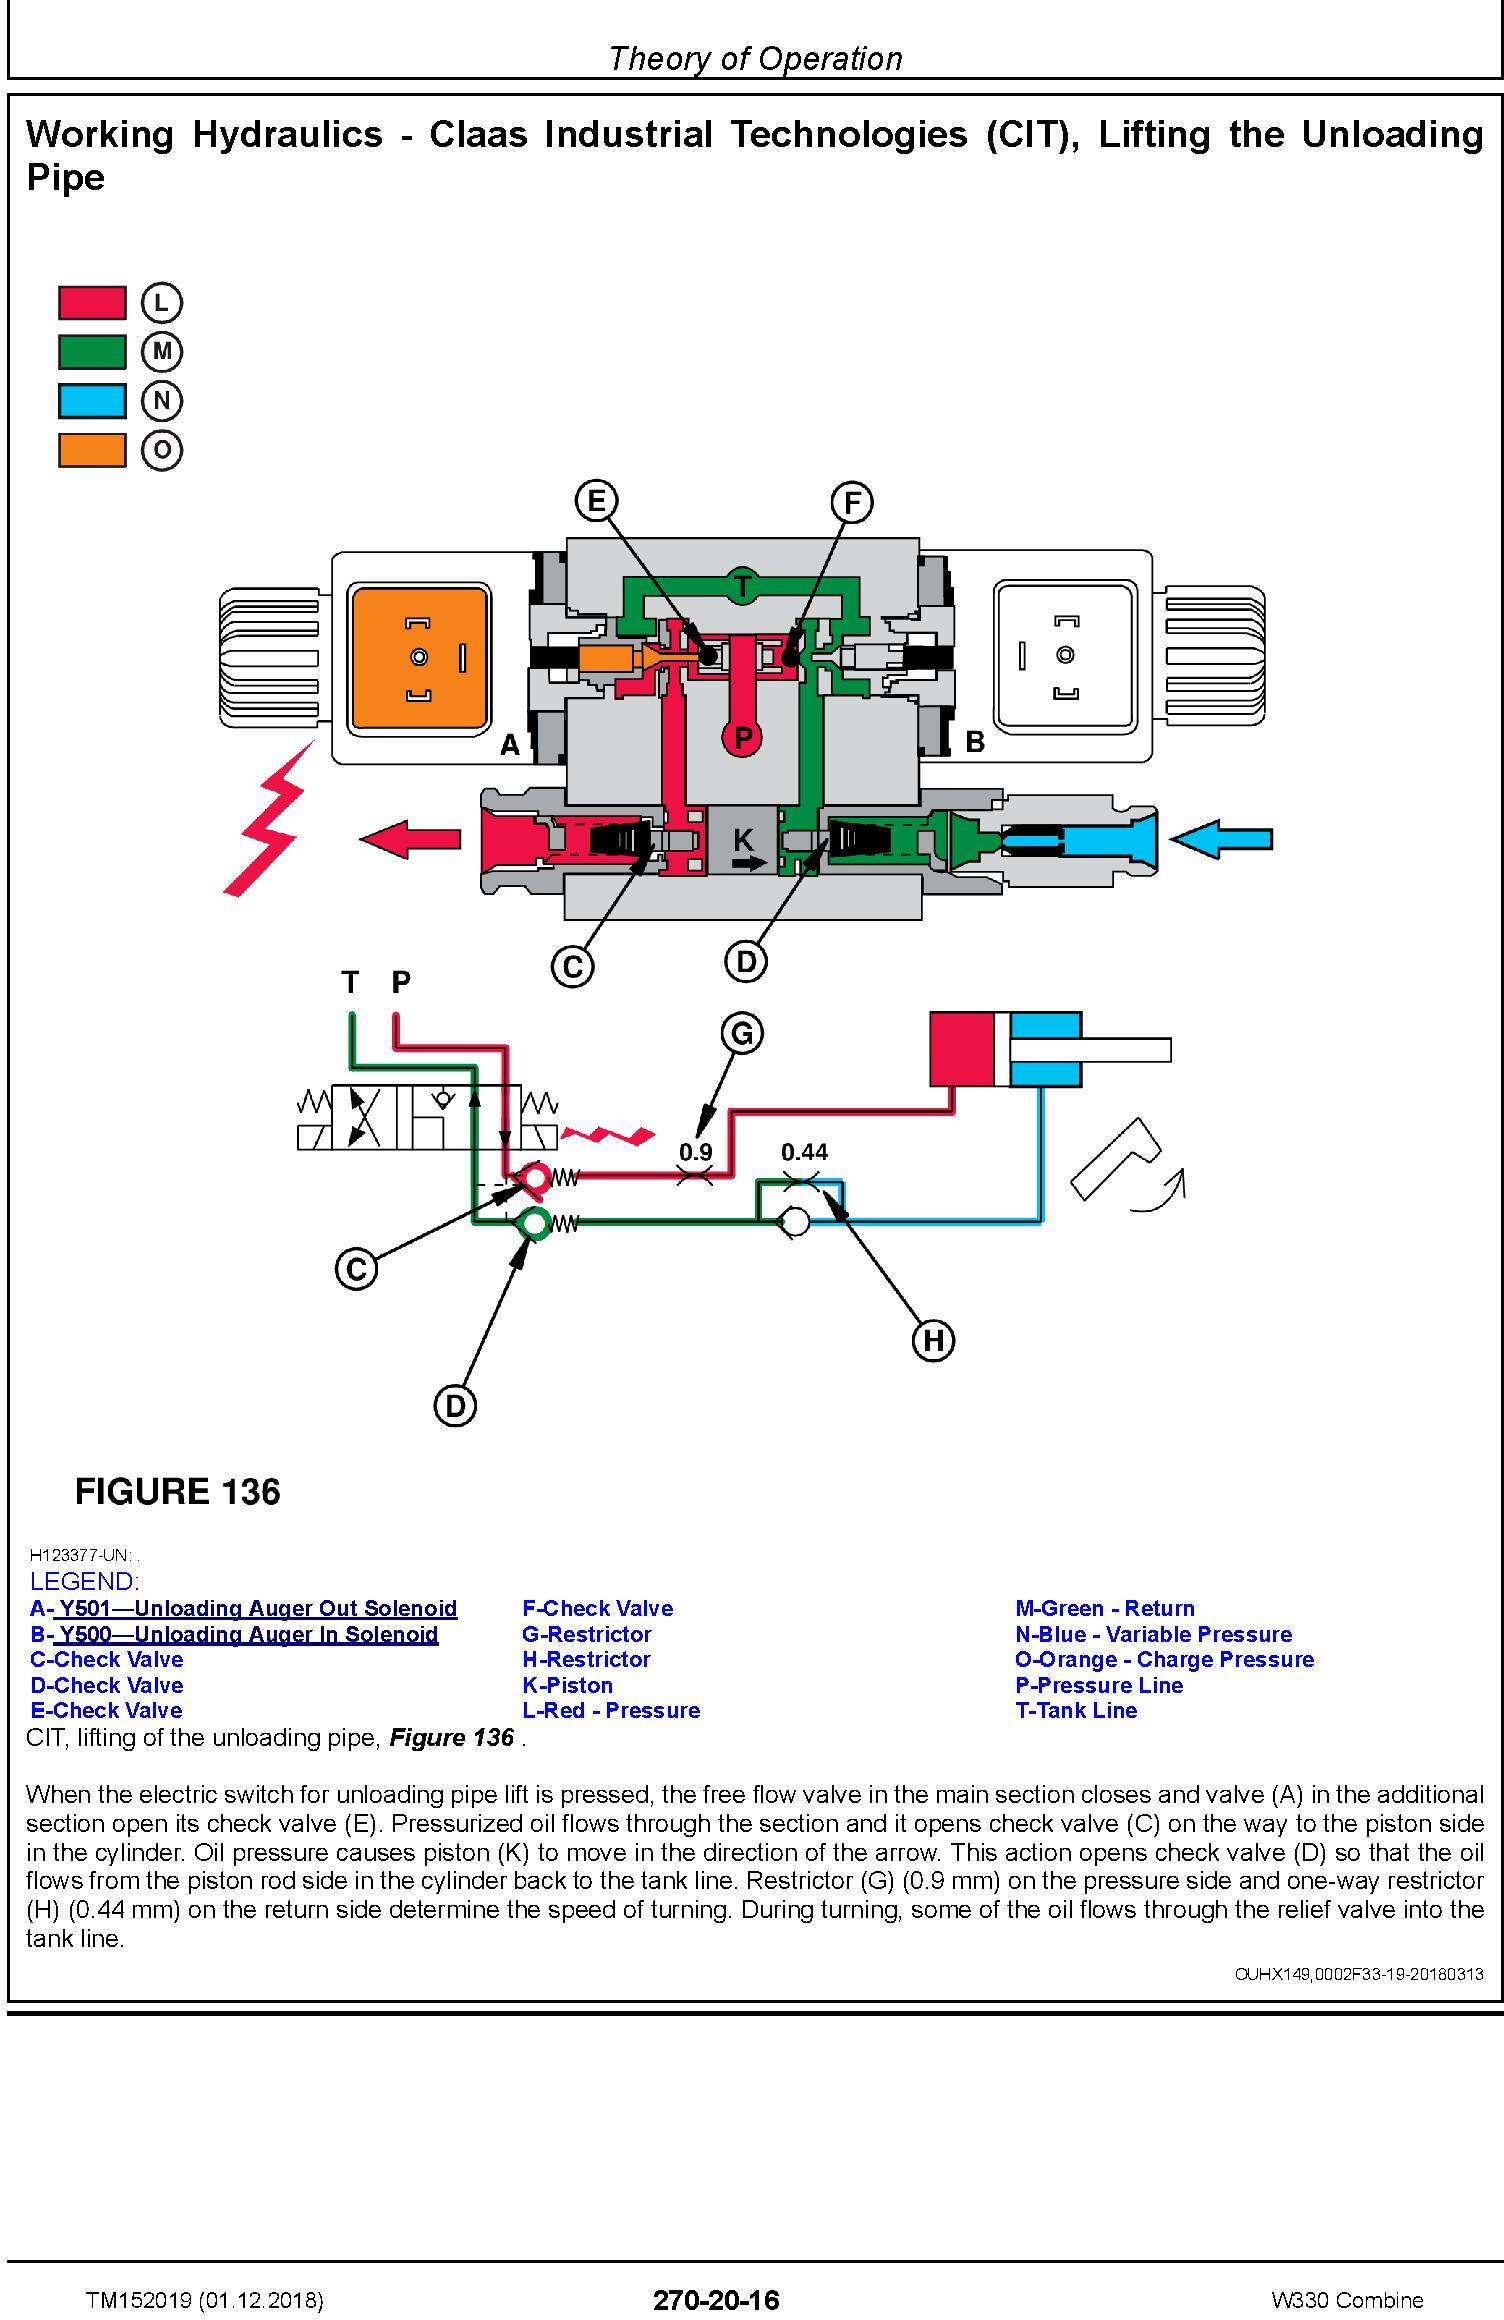 John Deere W330 Combine Diagnostic Technical Manual (TM152019) - 2